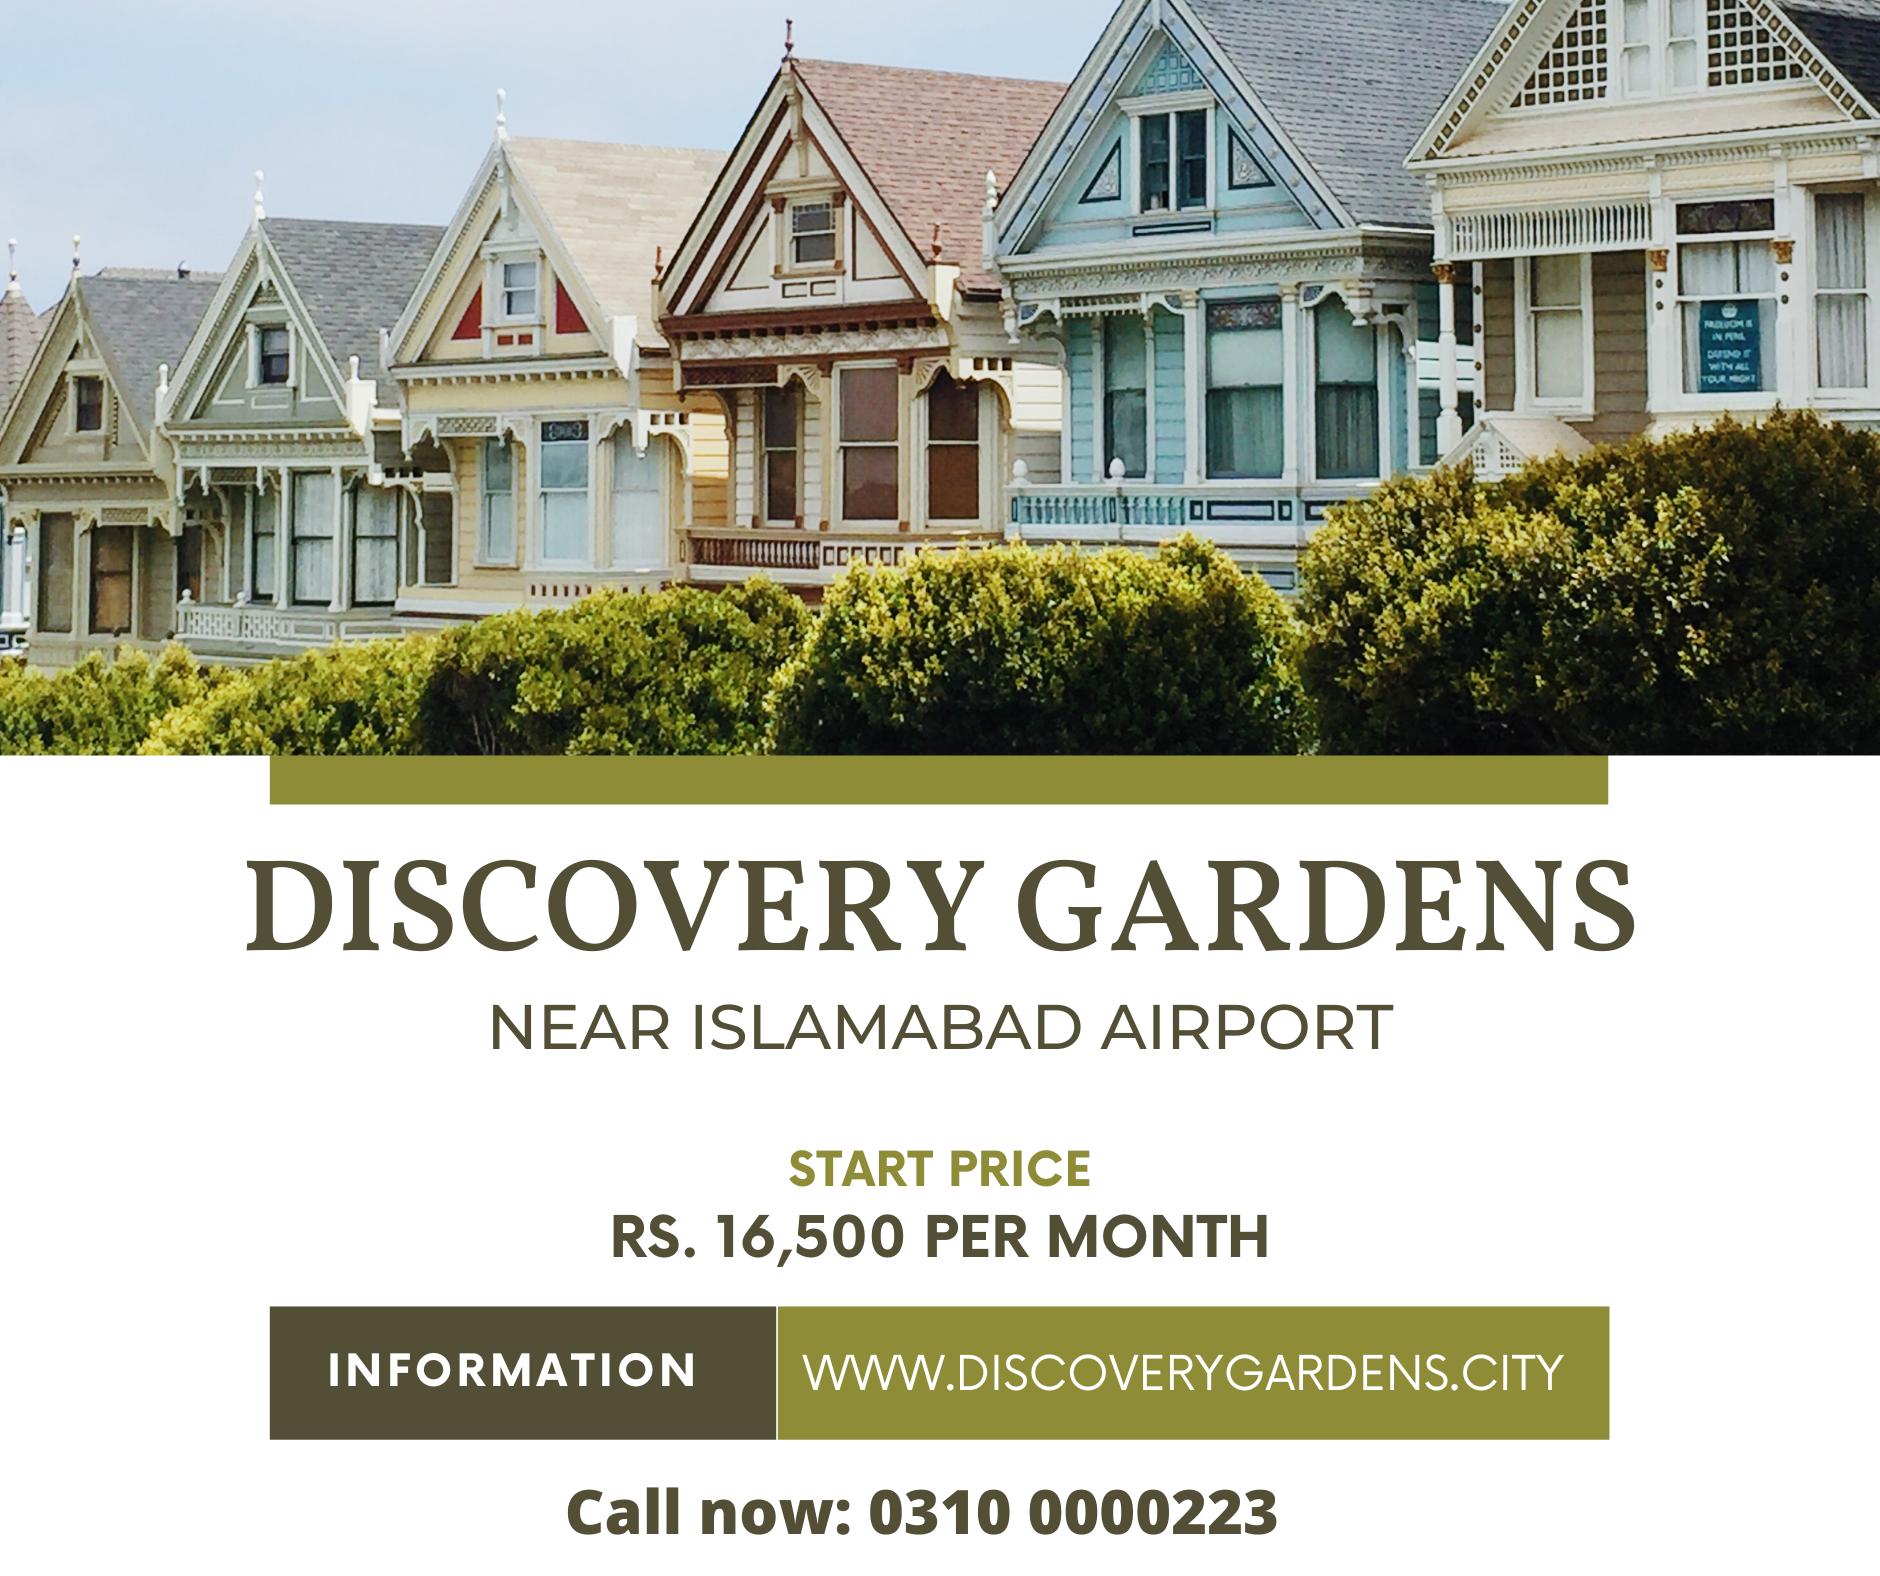 Discovery Gardens Islamabad - Housing society